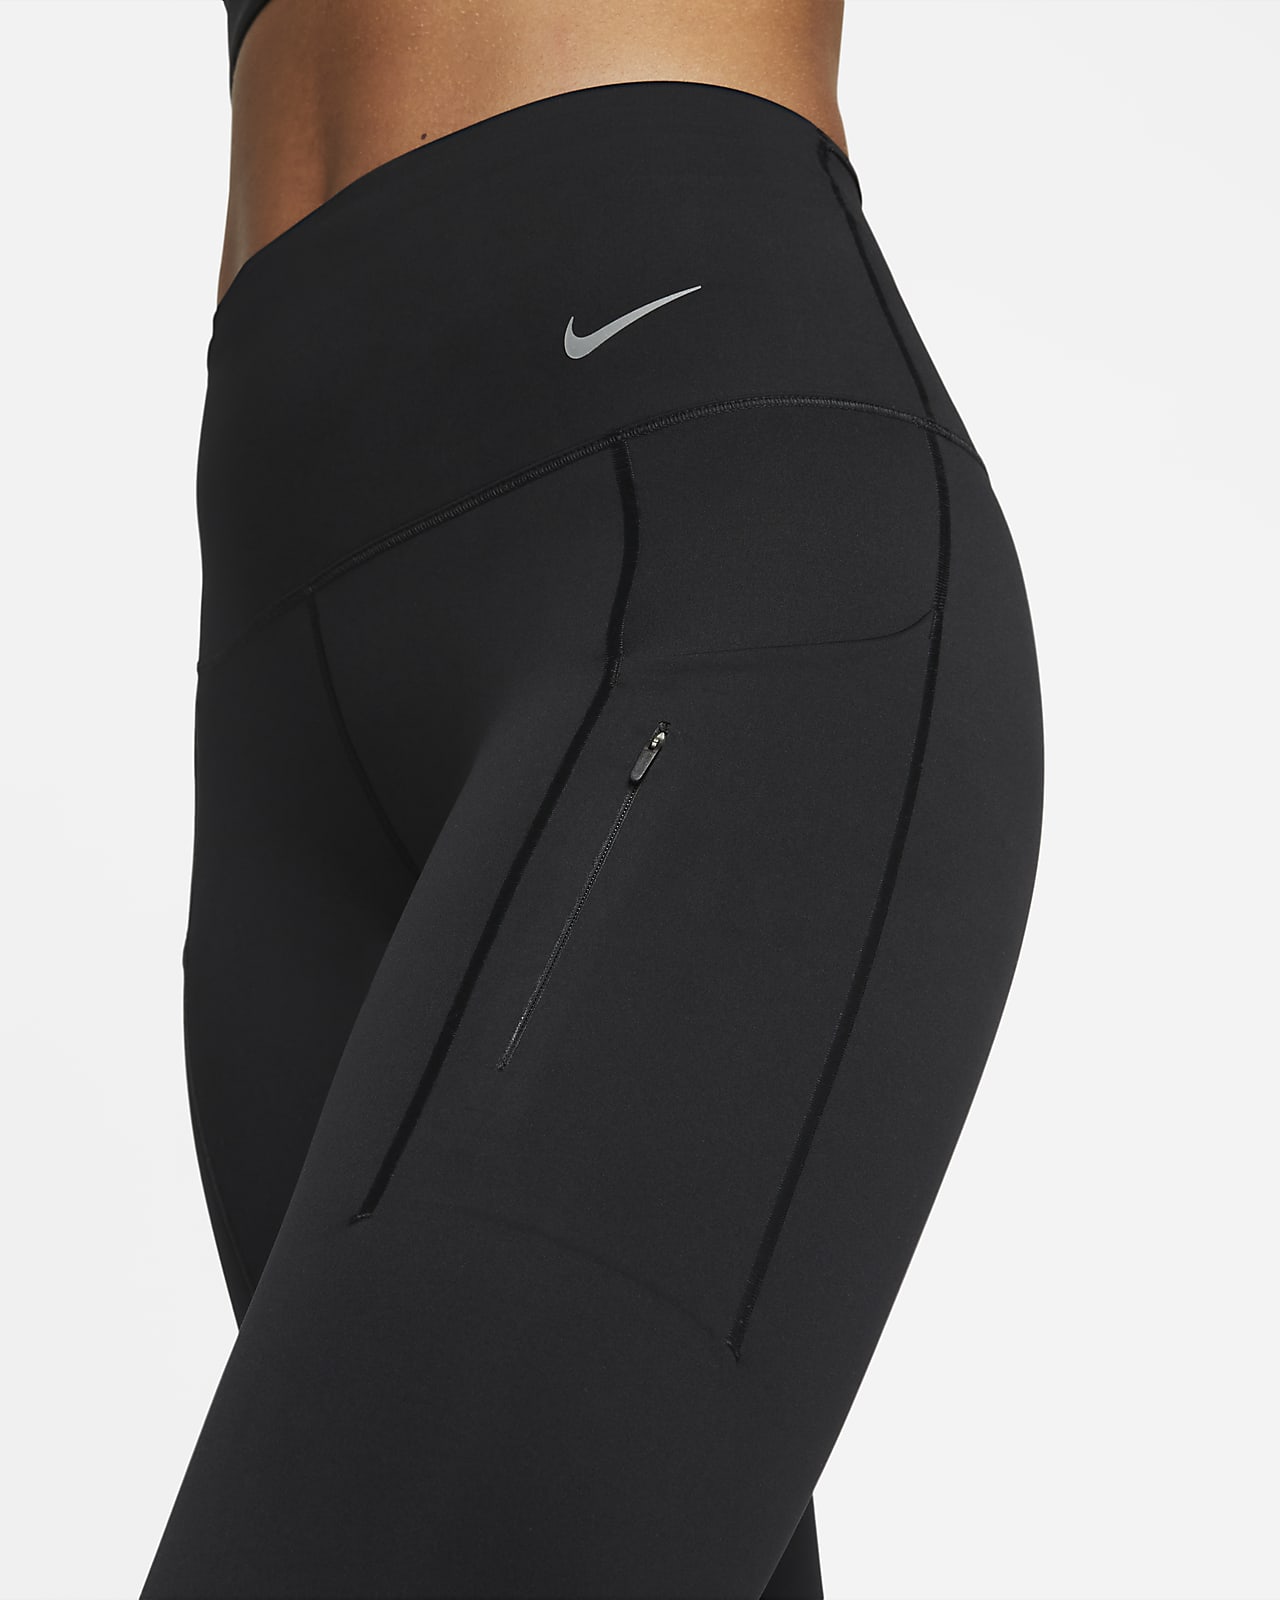 Women's Firm-Support Full-Length Leggings with Pockets. Nike LU